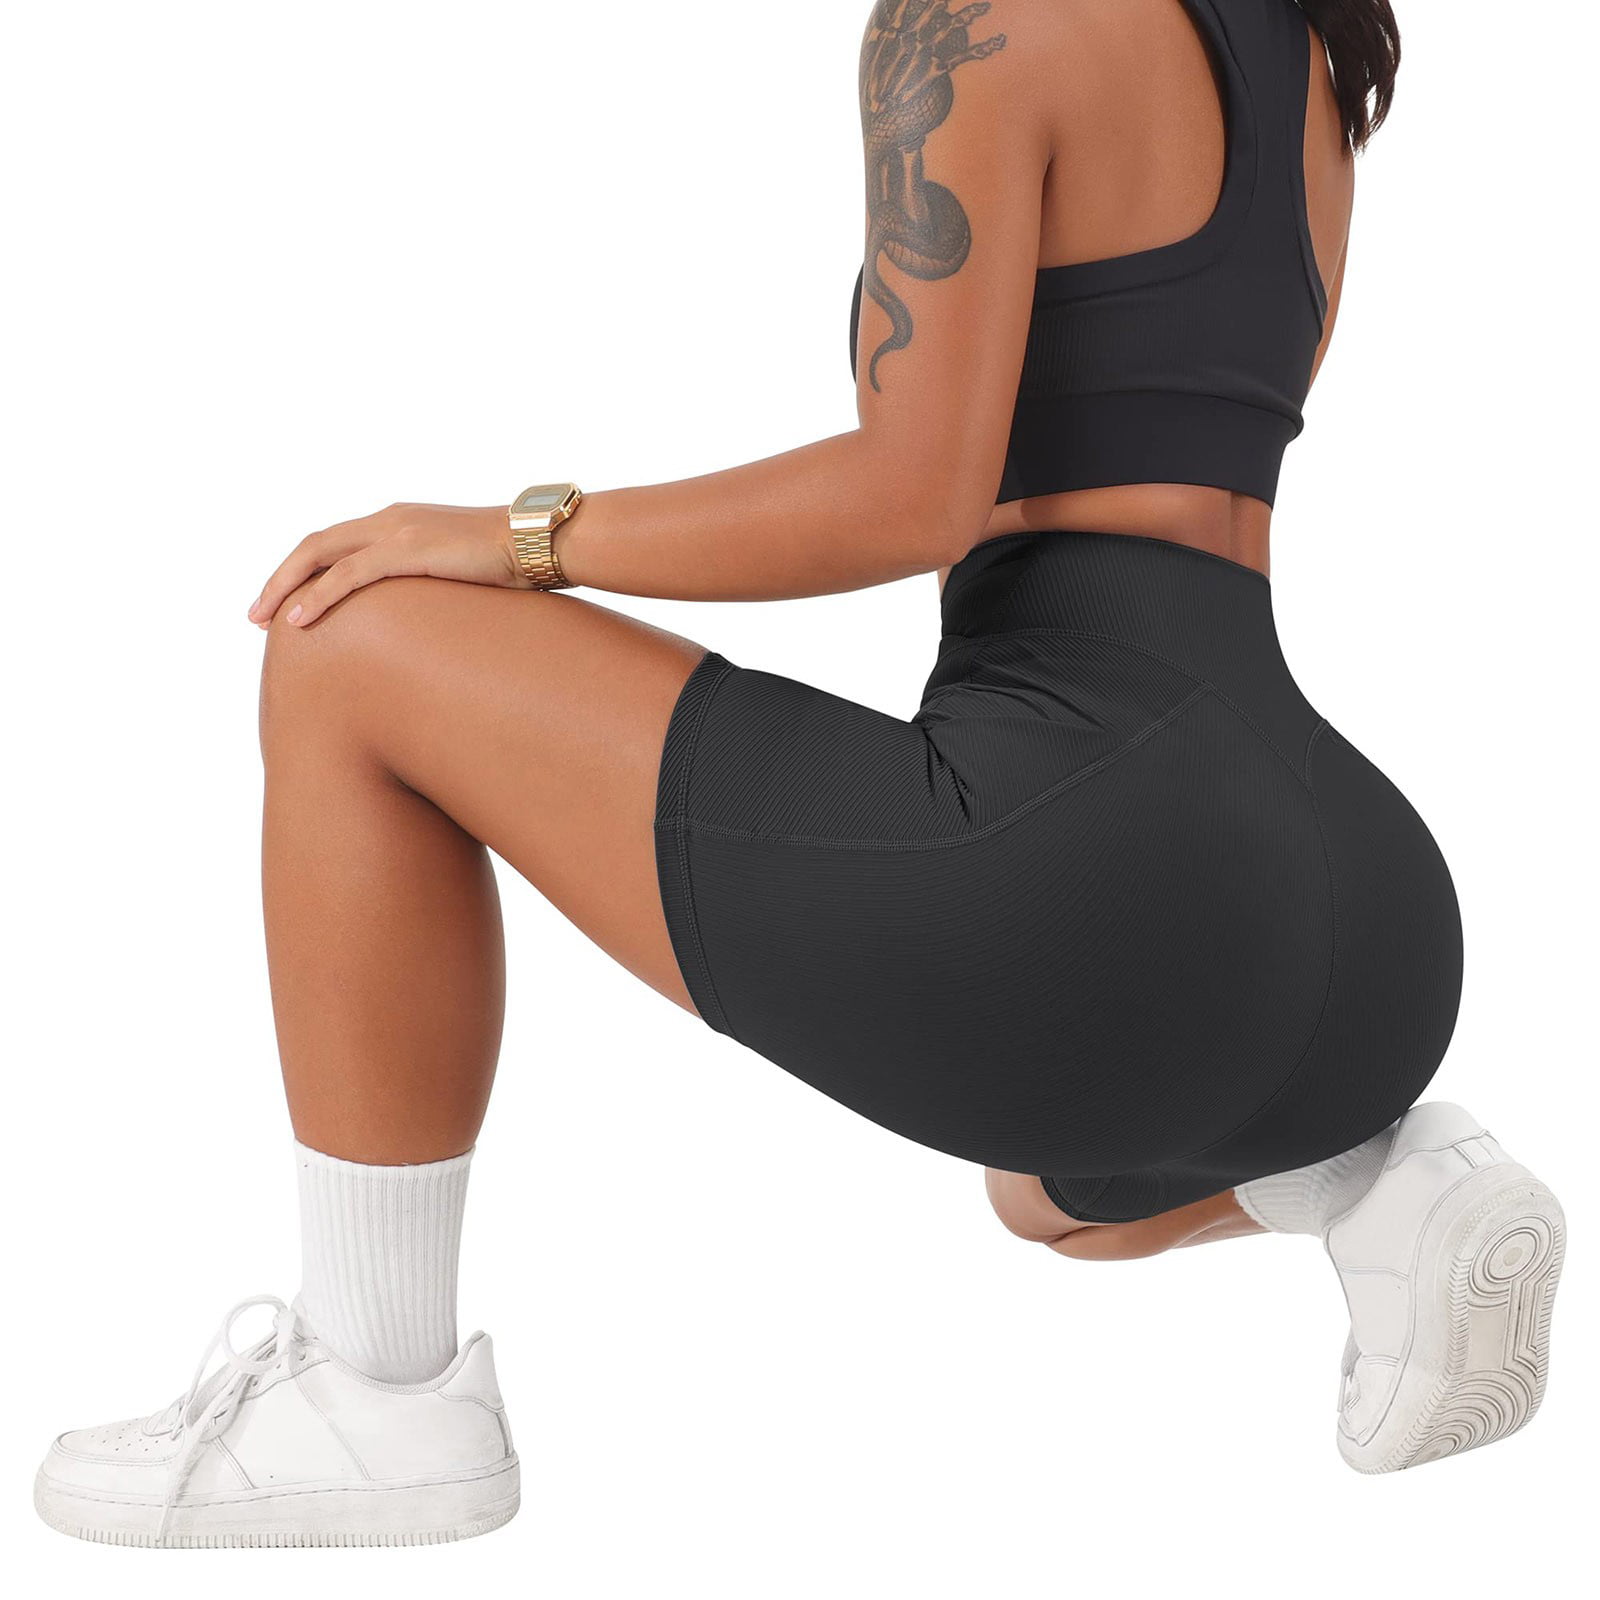 nsendm Unisex Pants Adult Yoga Pants Petite Short with Pockets Women's Hip  Lifting Exercise Fitness Running High Waist Yoga Petite Yoga(Khaki, L)